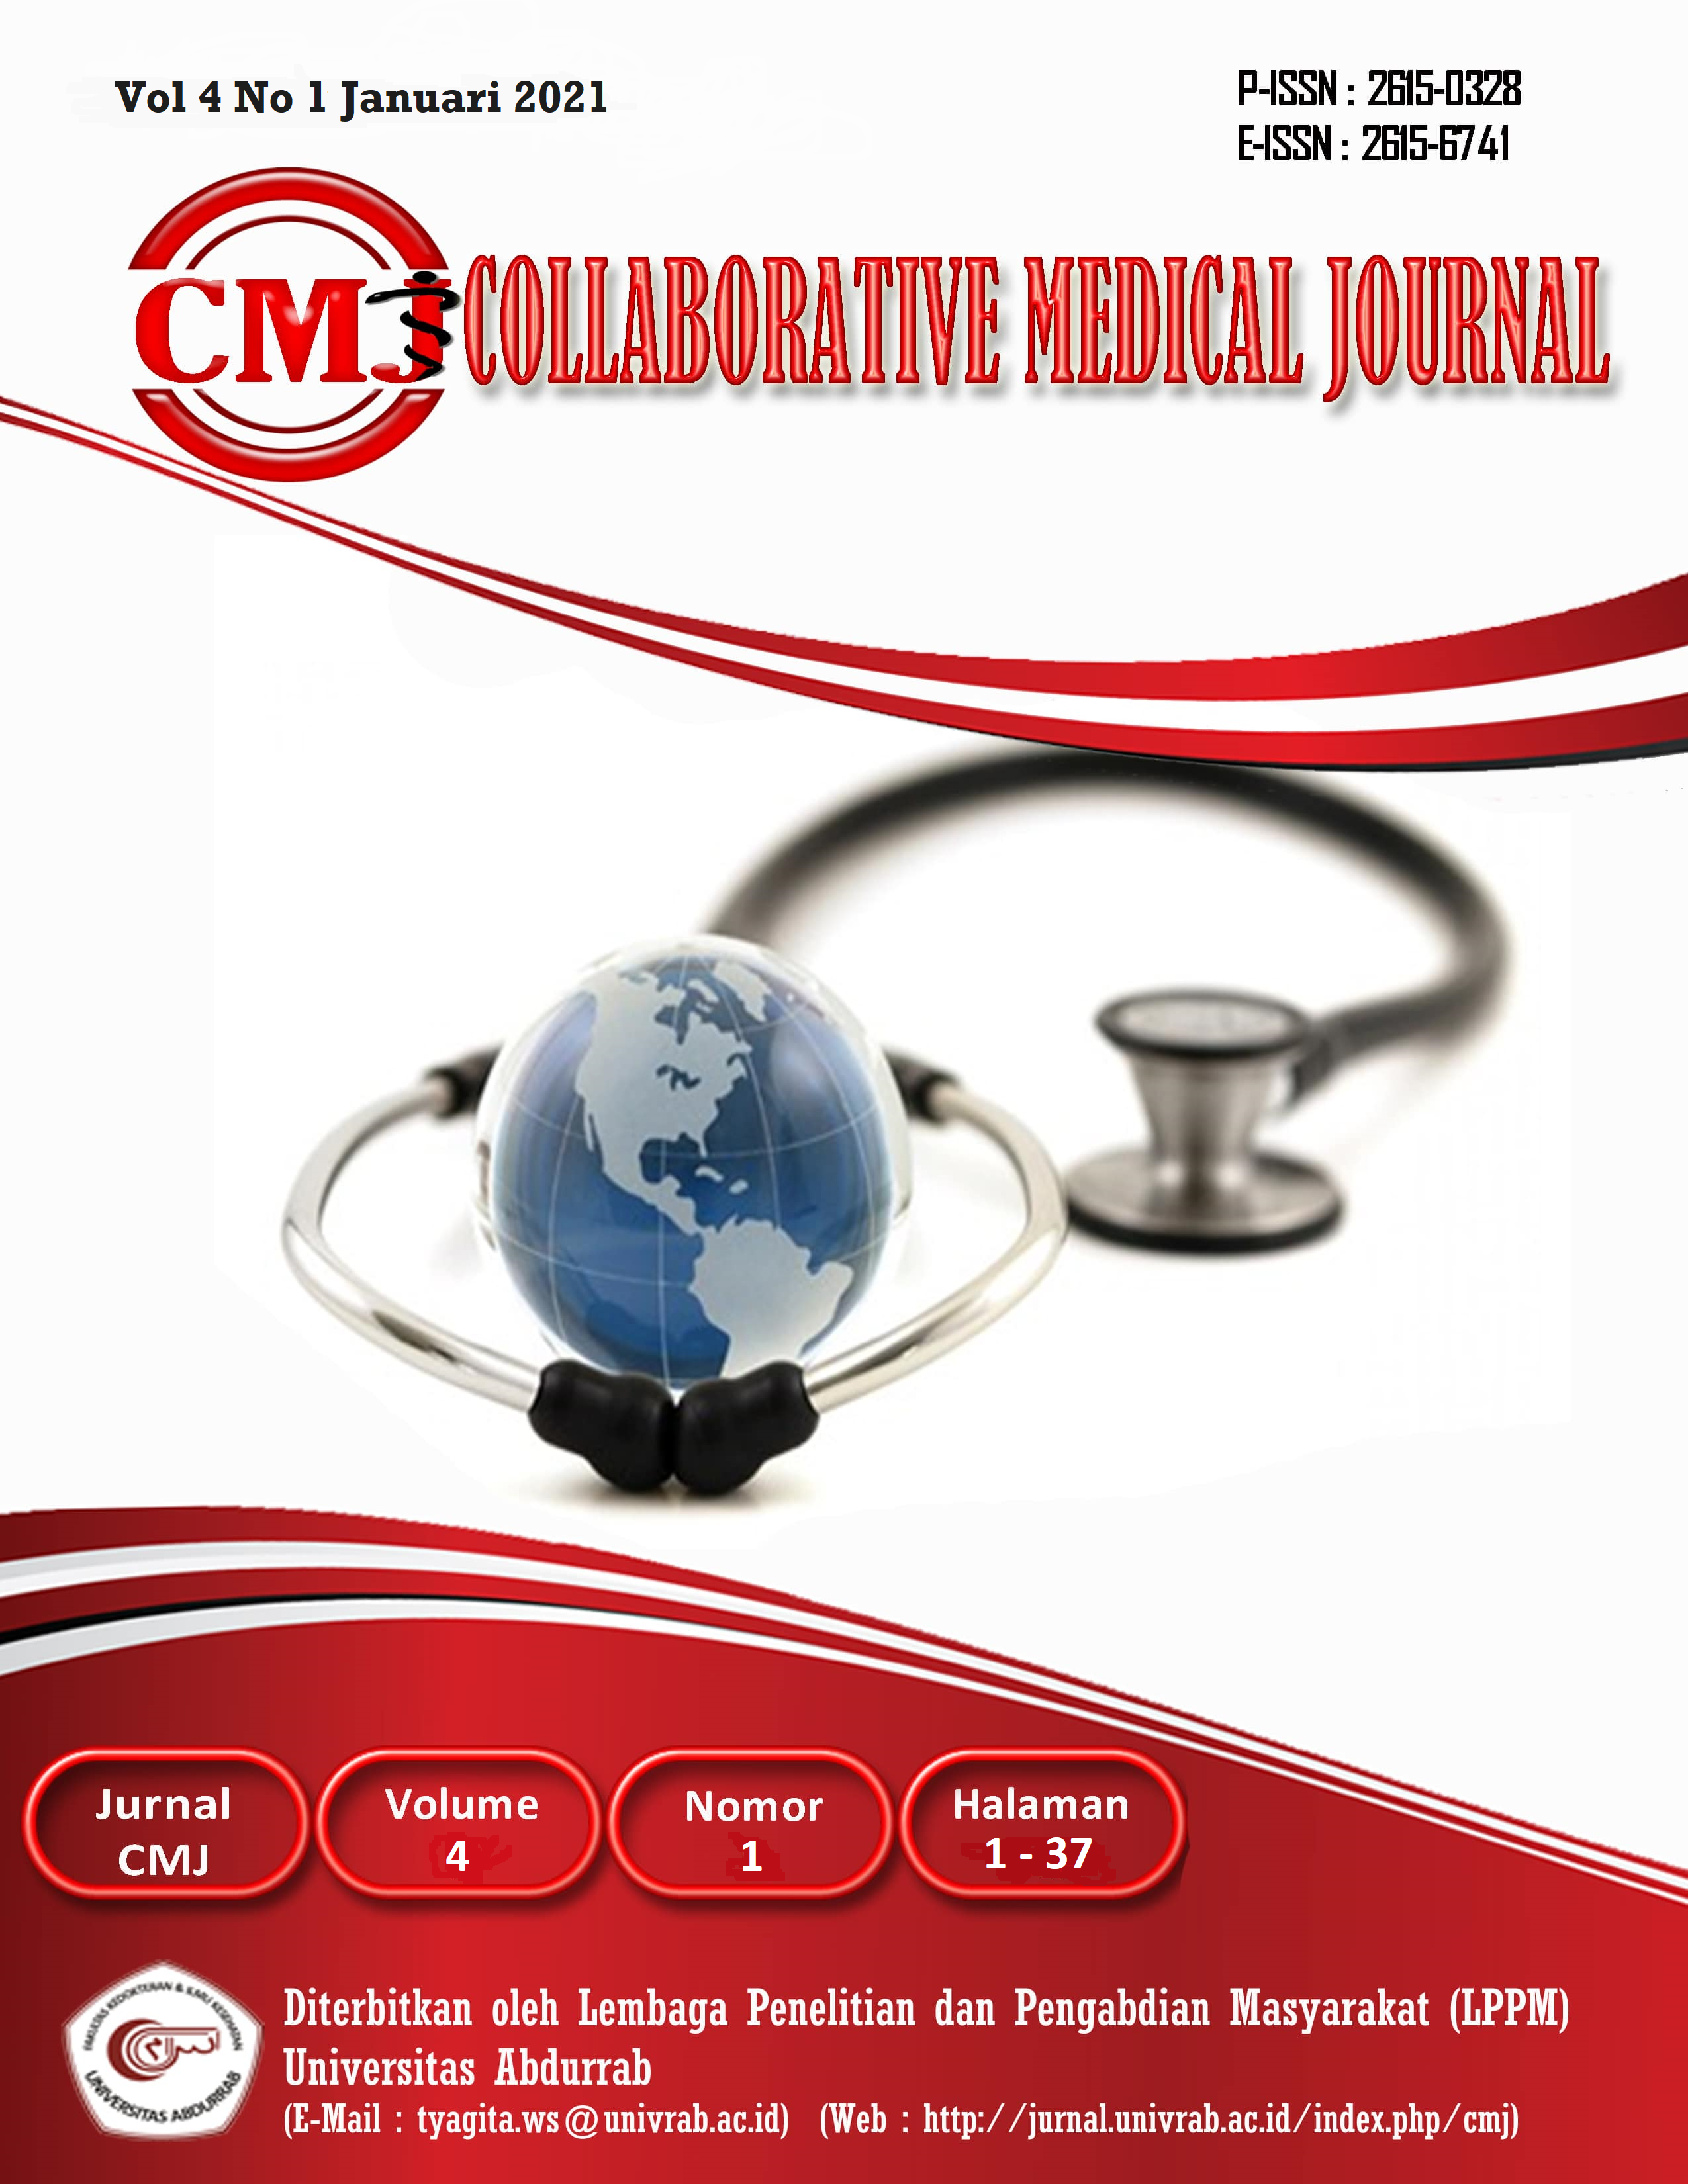 Collaborative Medical Journal